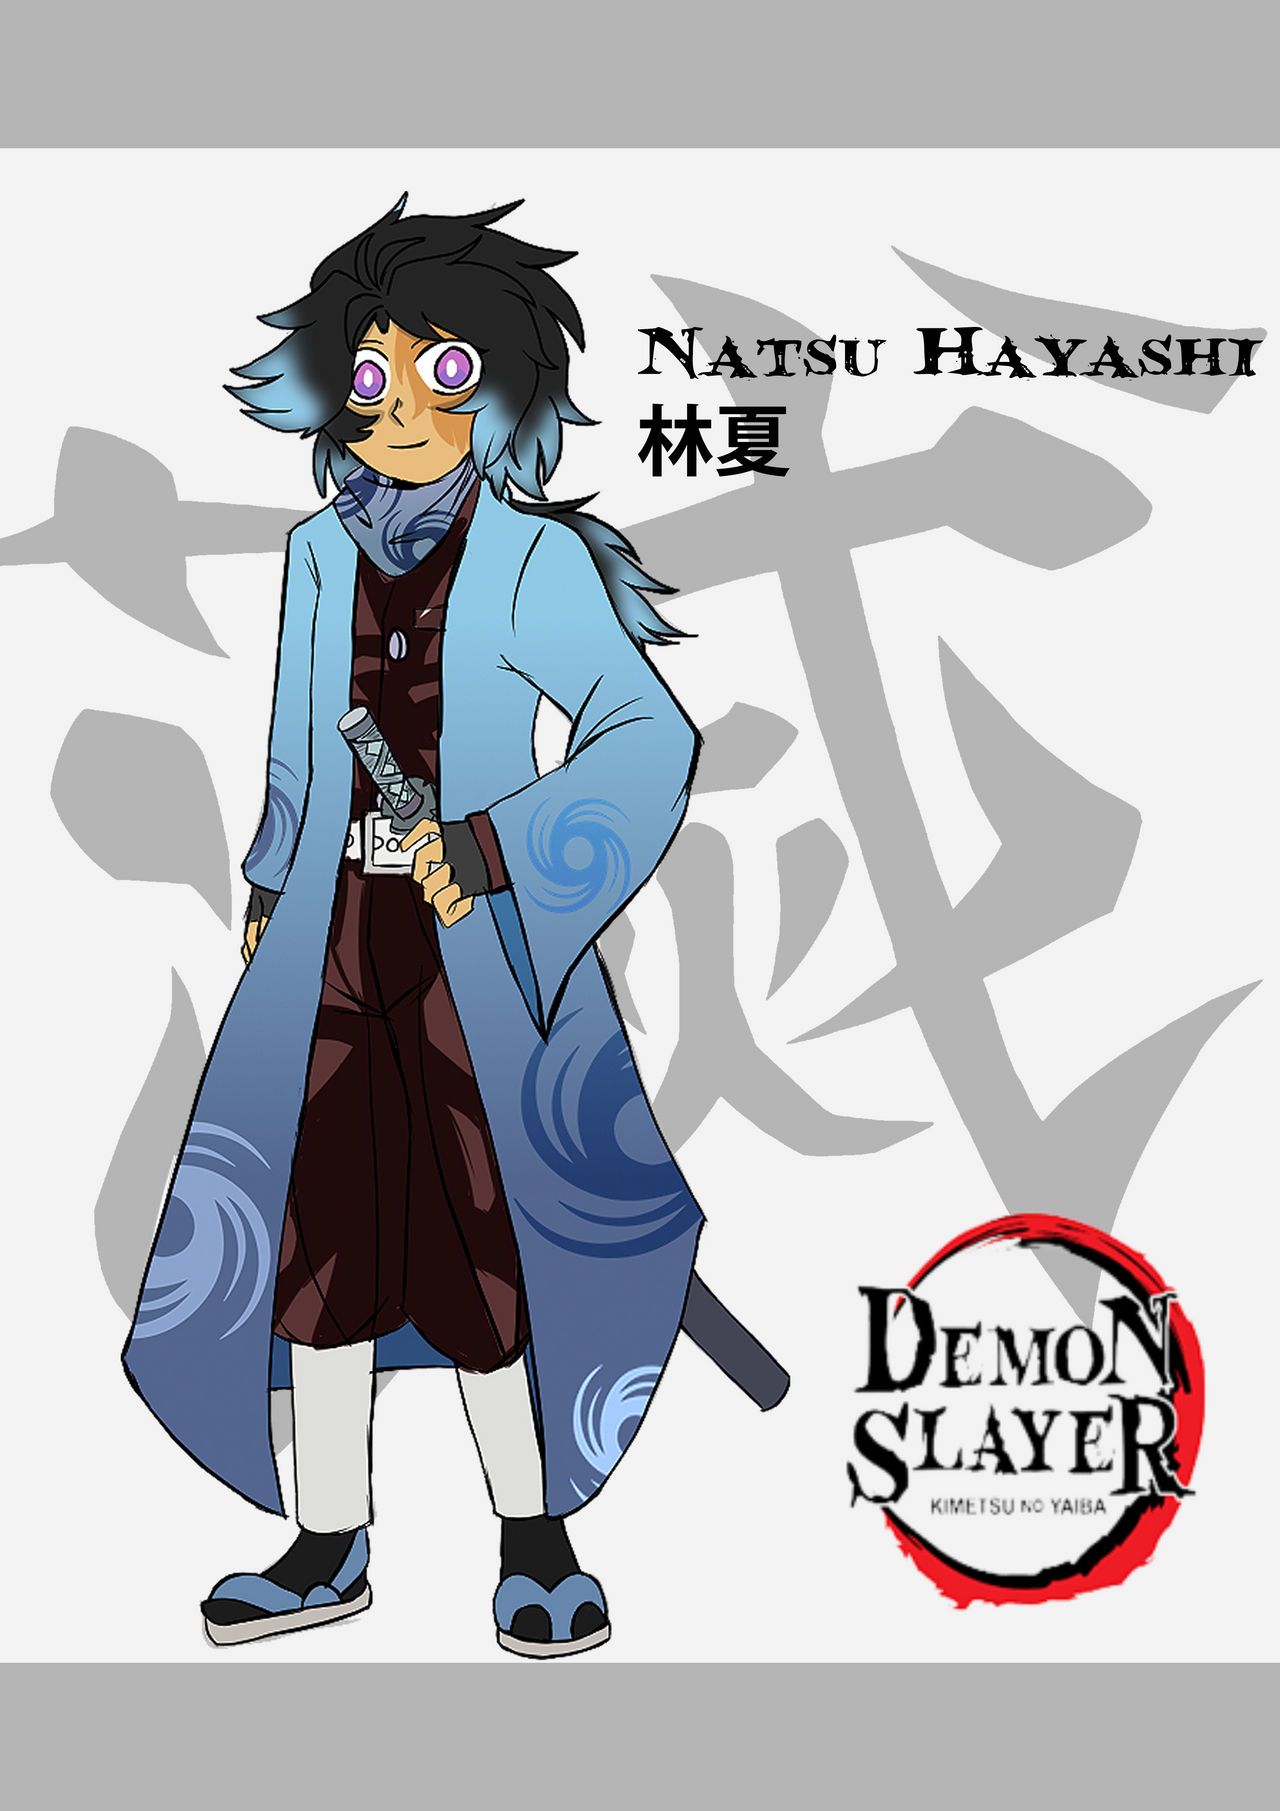 Demon Slayer ocs on Kimetsu-No-Yaiba-ocs - DeviantArt